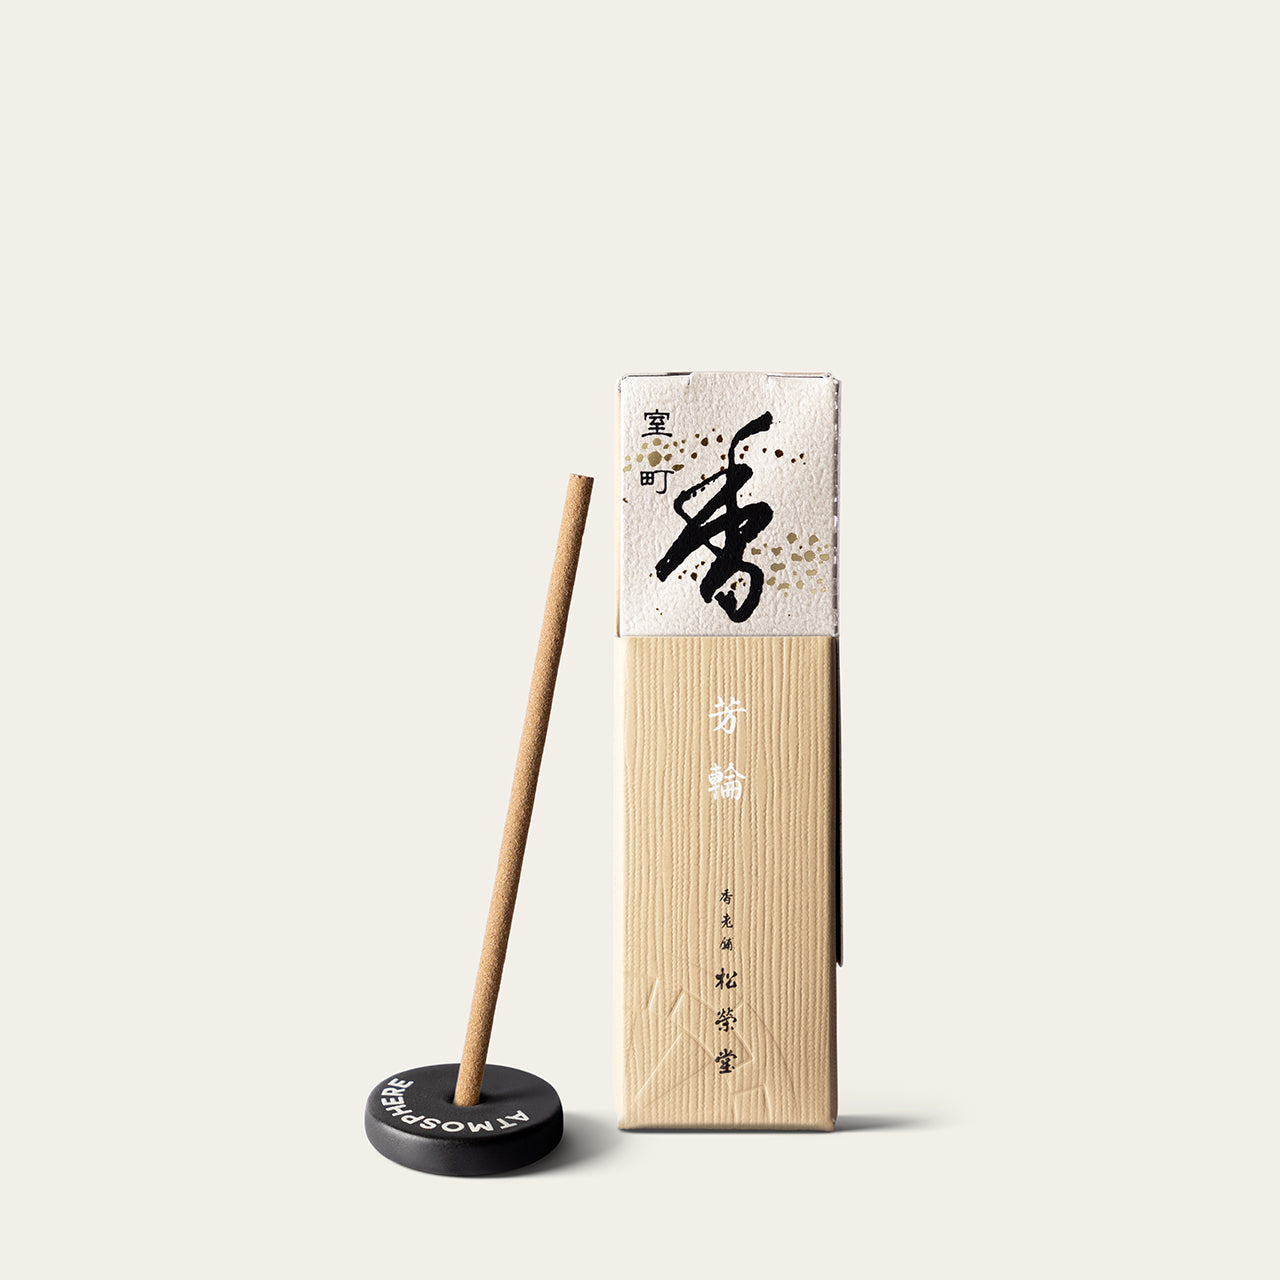 Shoyeido Horin City of Culture Muromachi Japanese incense sticks (20 sticks) with Atmosphere ceramic incense holder